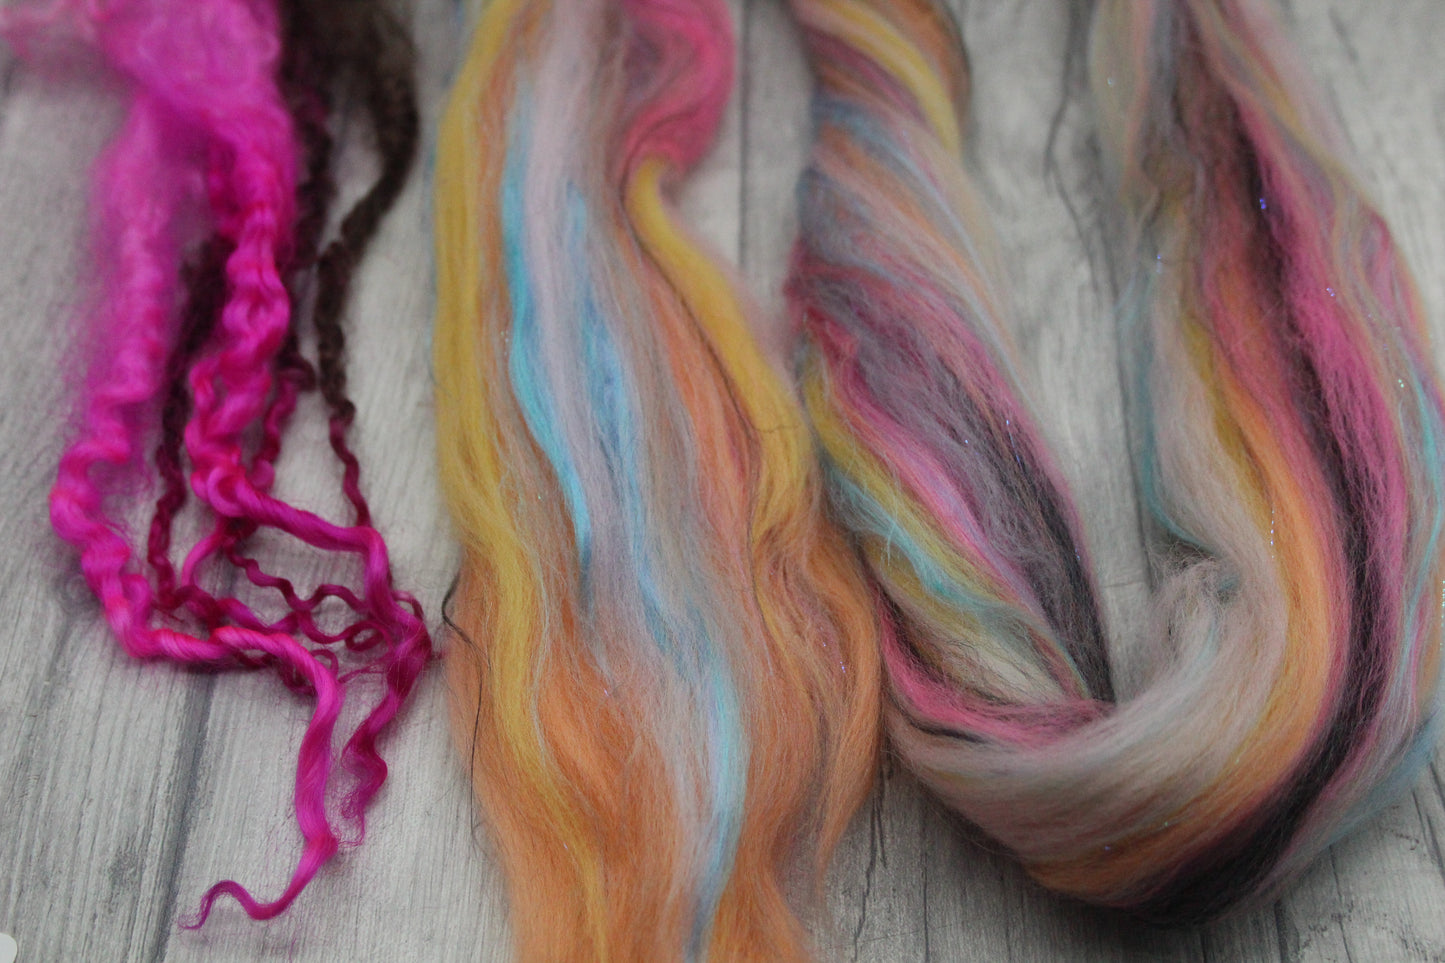 Wool Blend - Pink Black Yellow  - 18 grams / 0.6 oz  - Fibre for felting, weaving or spinning